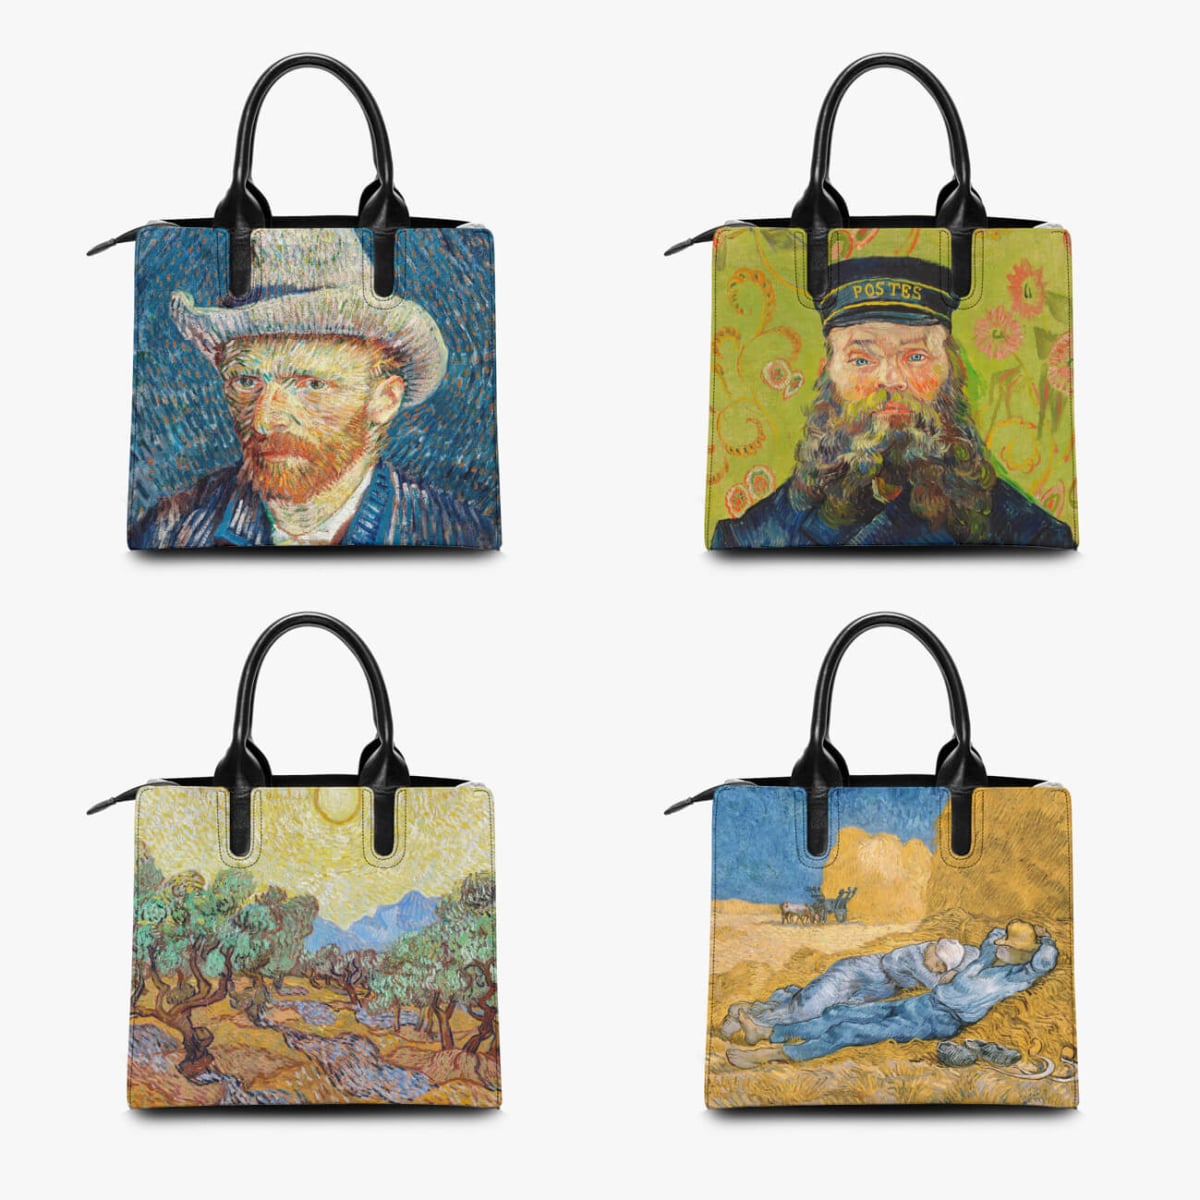 Vincent van Gogh’s Self-portrait Painting Handbag